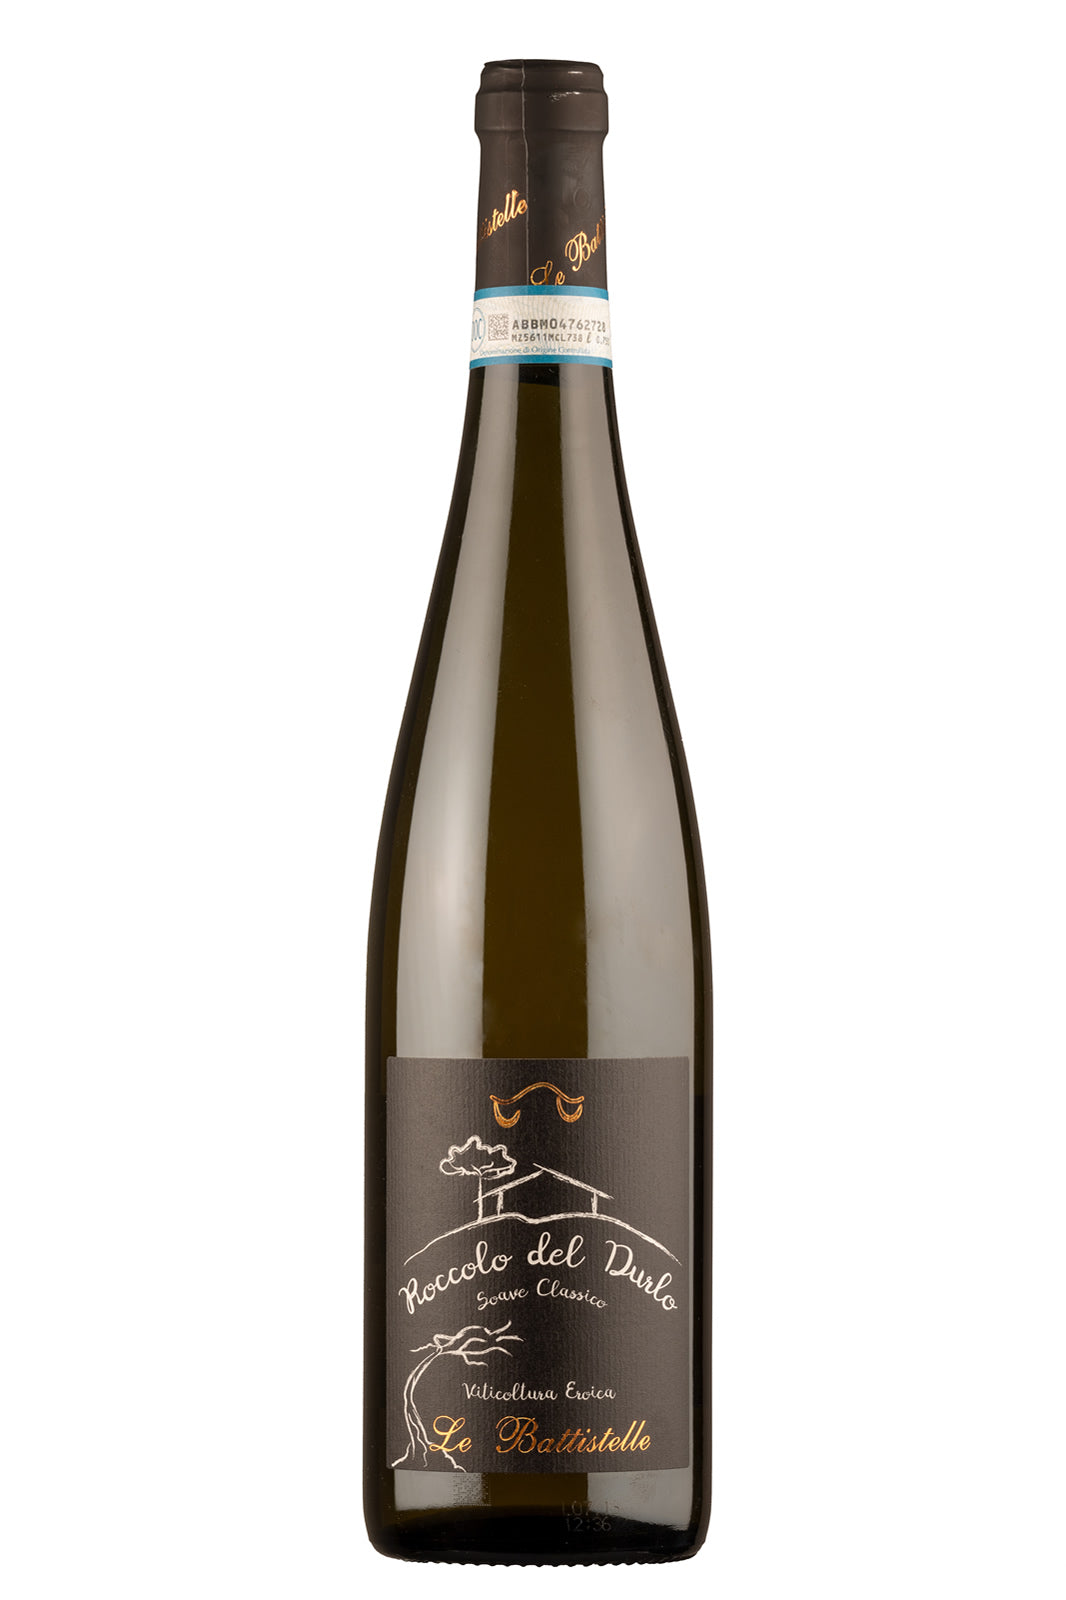 The Soave: Historical Whites of Italian Wine Production 12 bottles